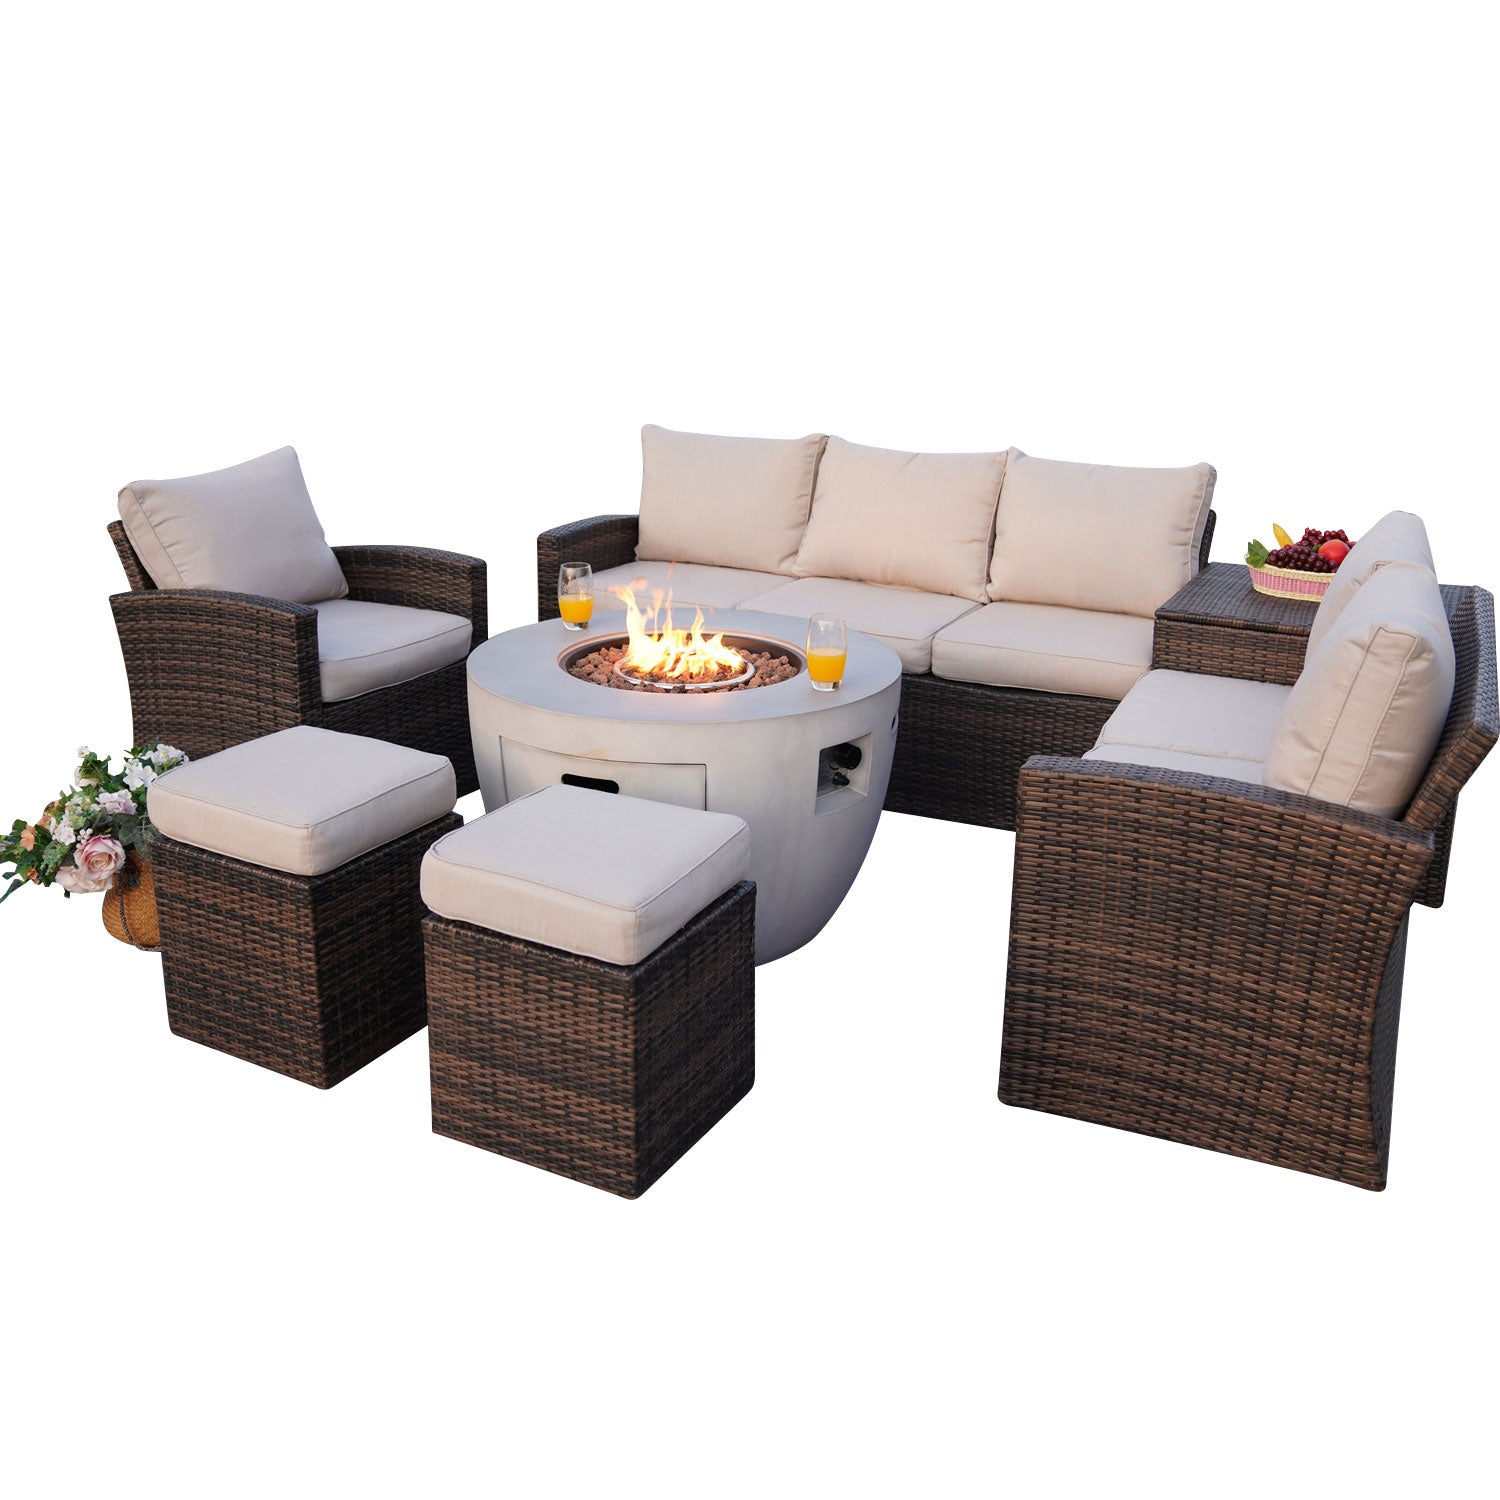 Abrihome Aurora 7PCS Patio Garden Rattan Wicker Dining Sofa Fire Table Set